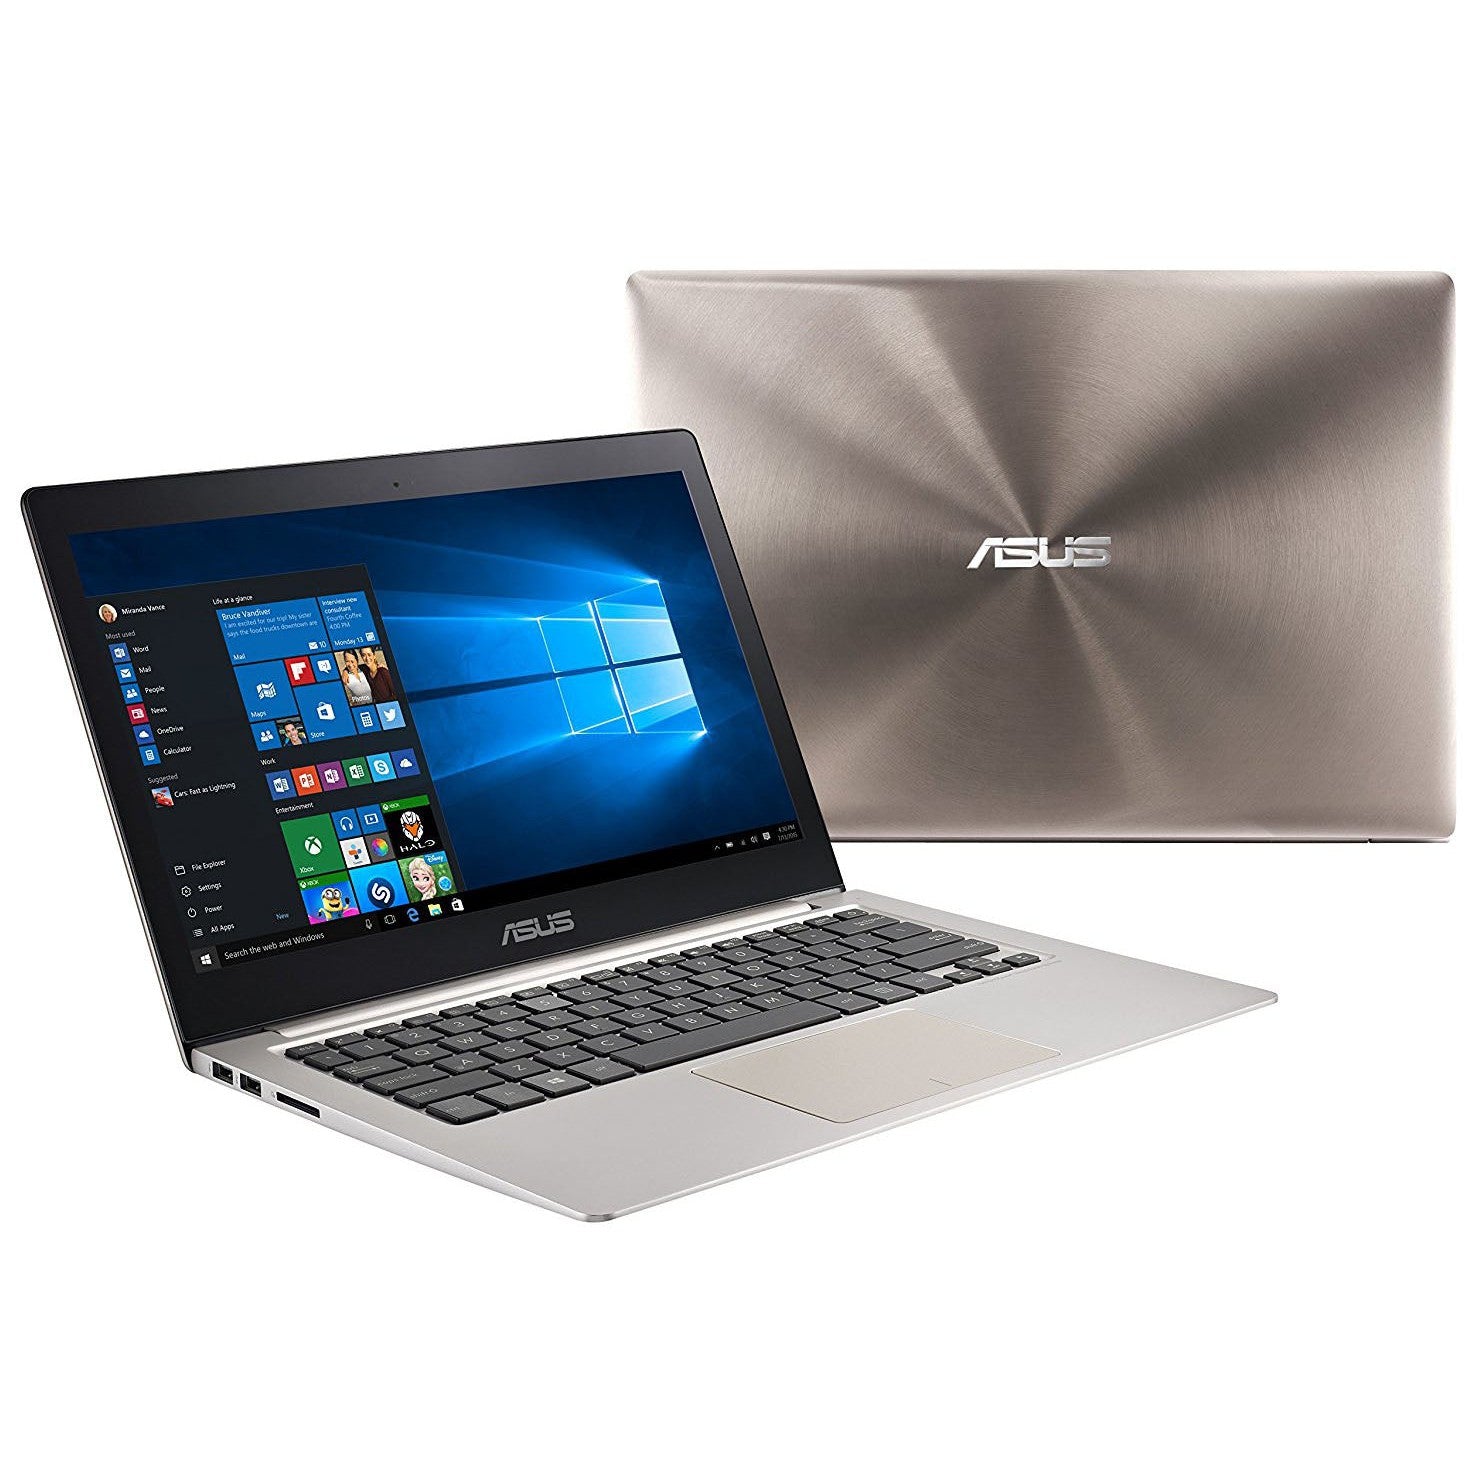 ASUS ZenBook UX303UB-R4074T Intel Core i5-6200U 8GB RAM 1TB HDD, 13" - Grey